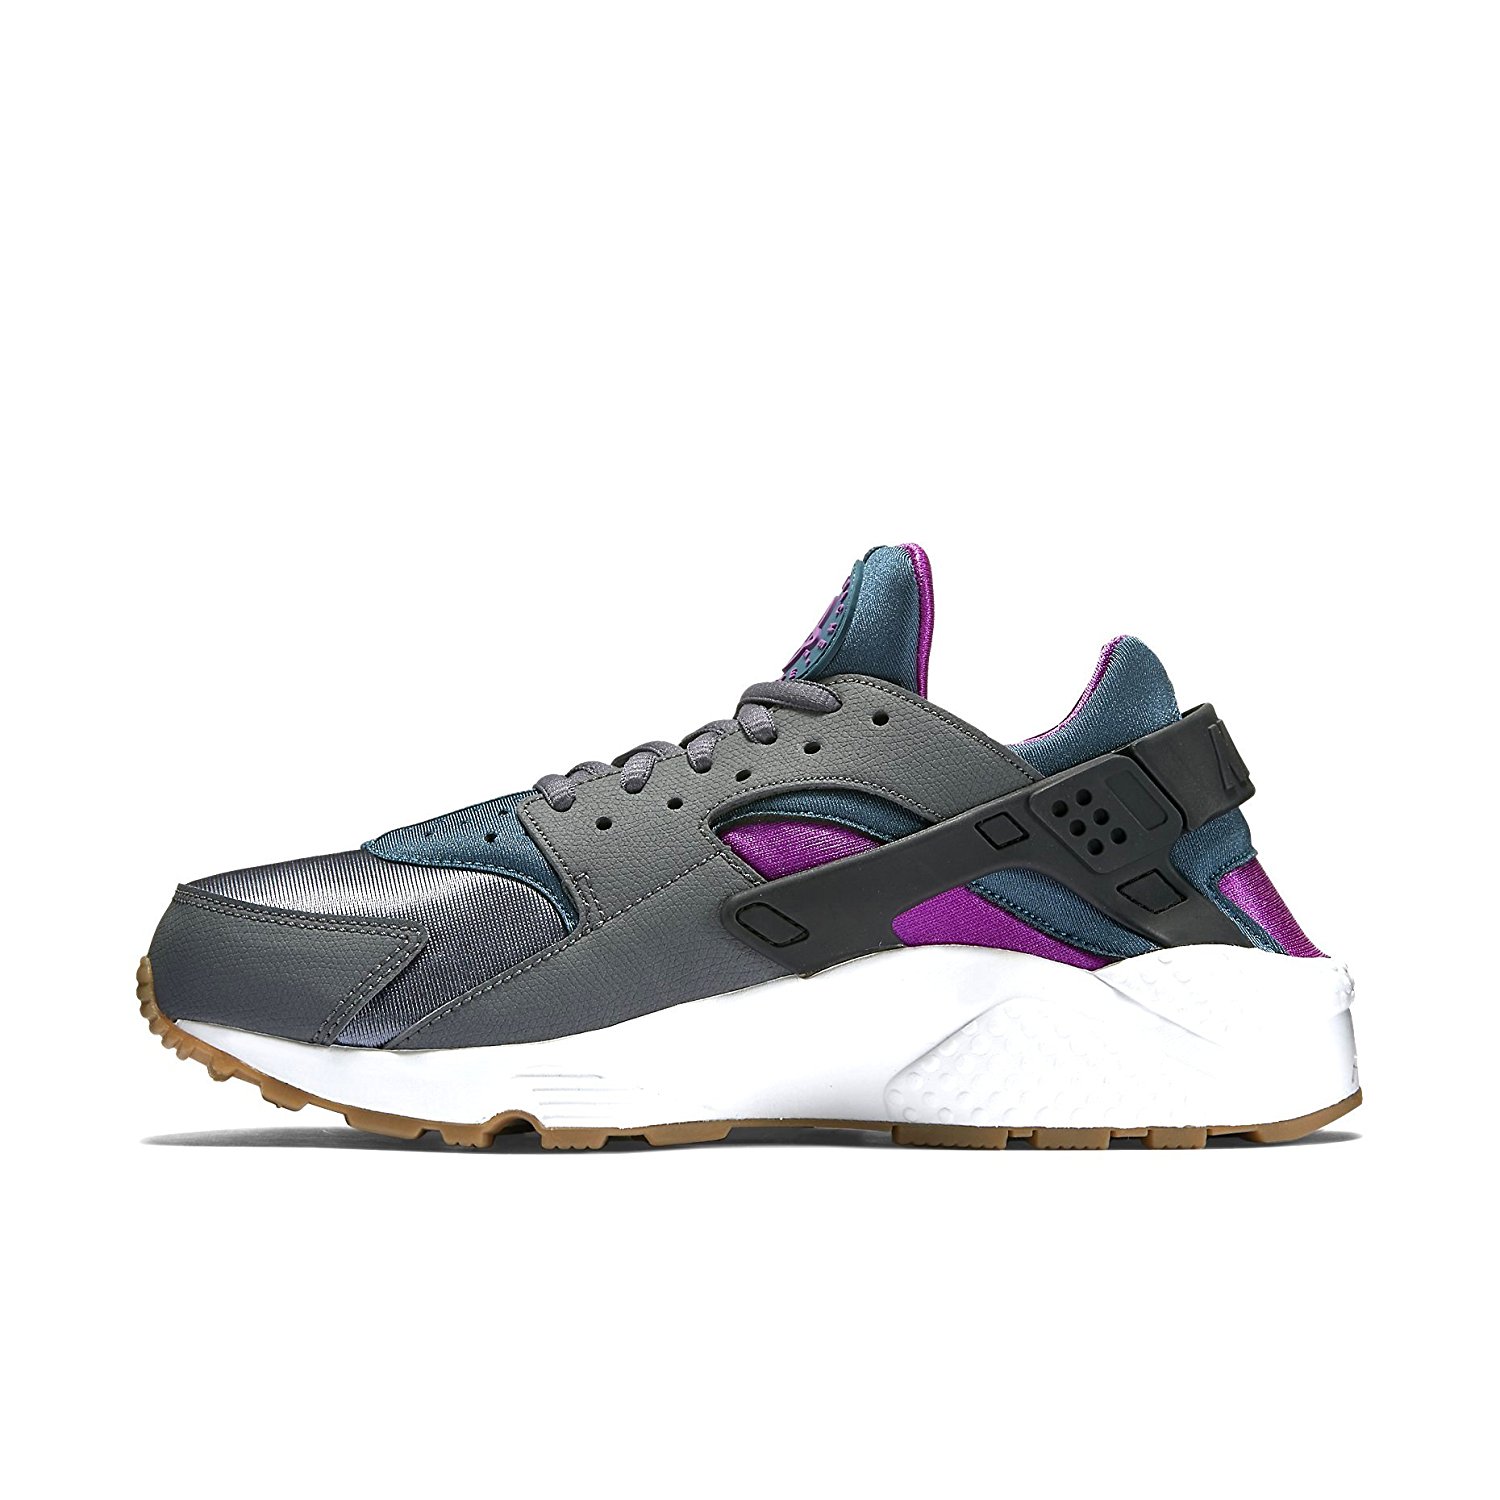 Nike Women's Air Huarache Run Running Shoe-Dark Grey/Teal/Violet - image 3 of 5